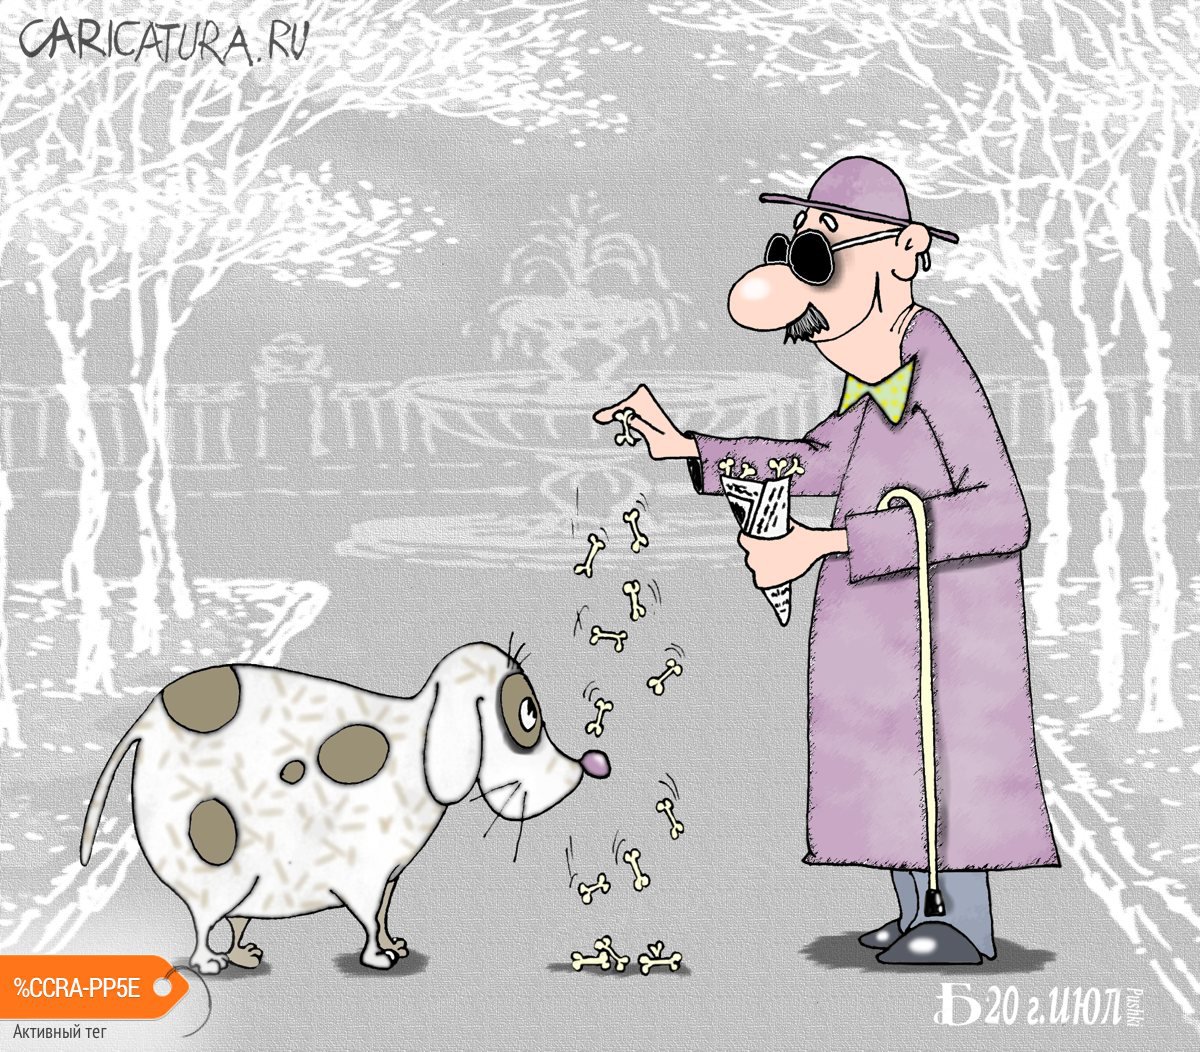 Карикатура "Про цену глупости", Борис Демин